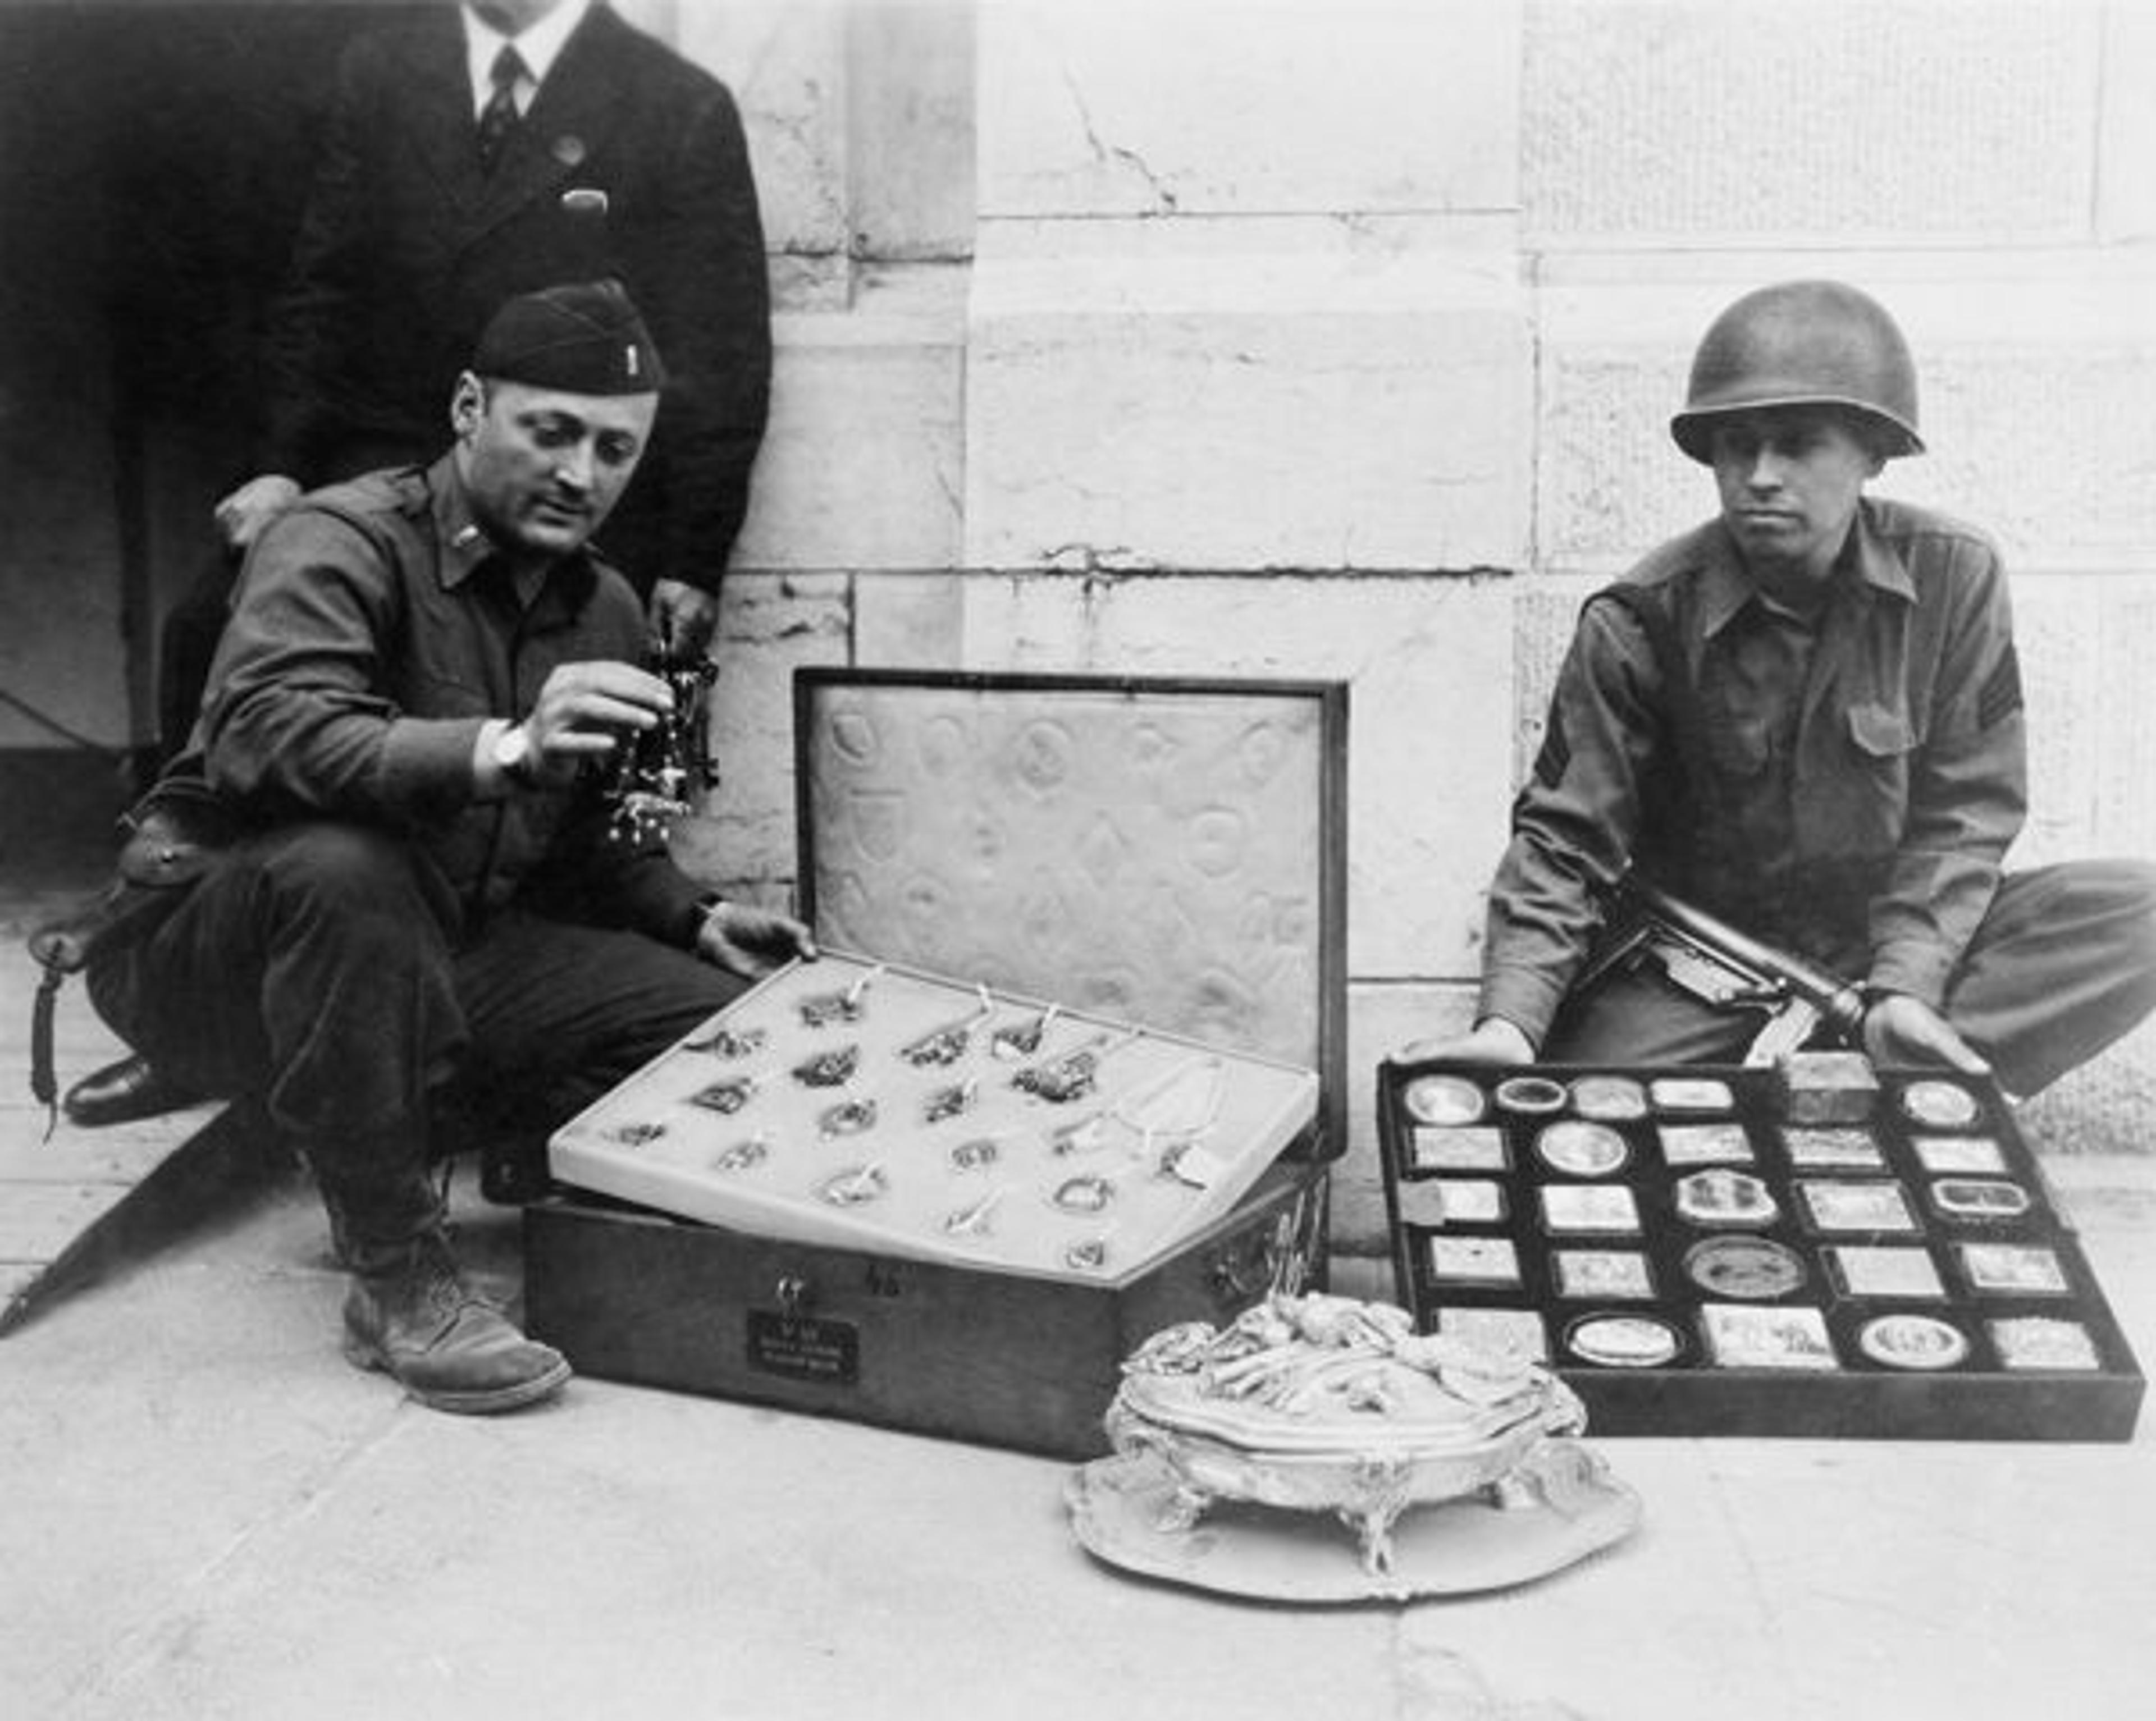 James Rorimer with Sgt. Antonio T. Valin examining recovered objects. Neuschwanstein, Germany, May 1945